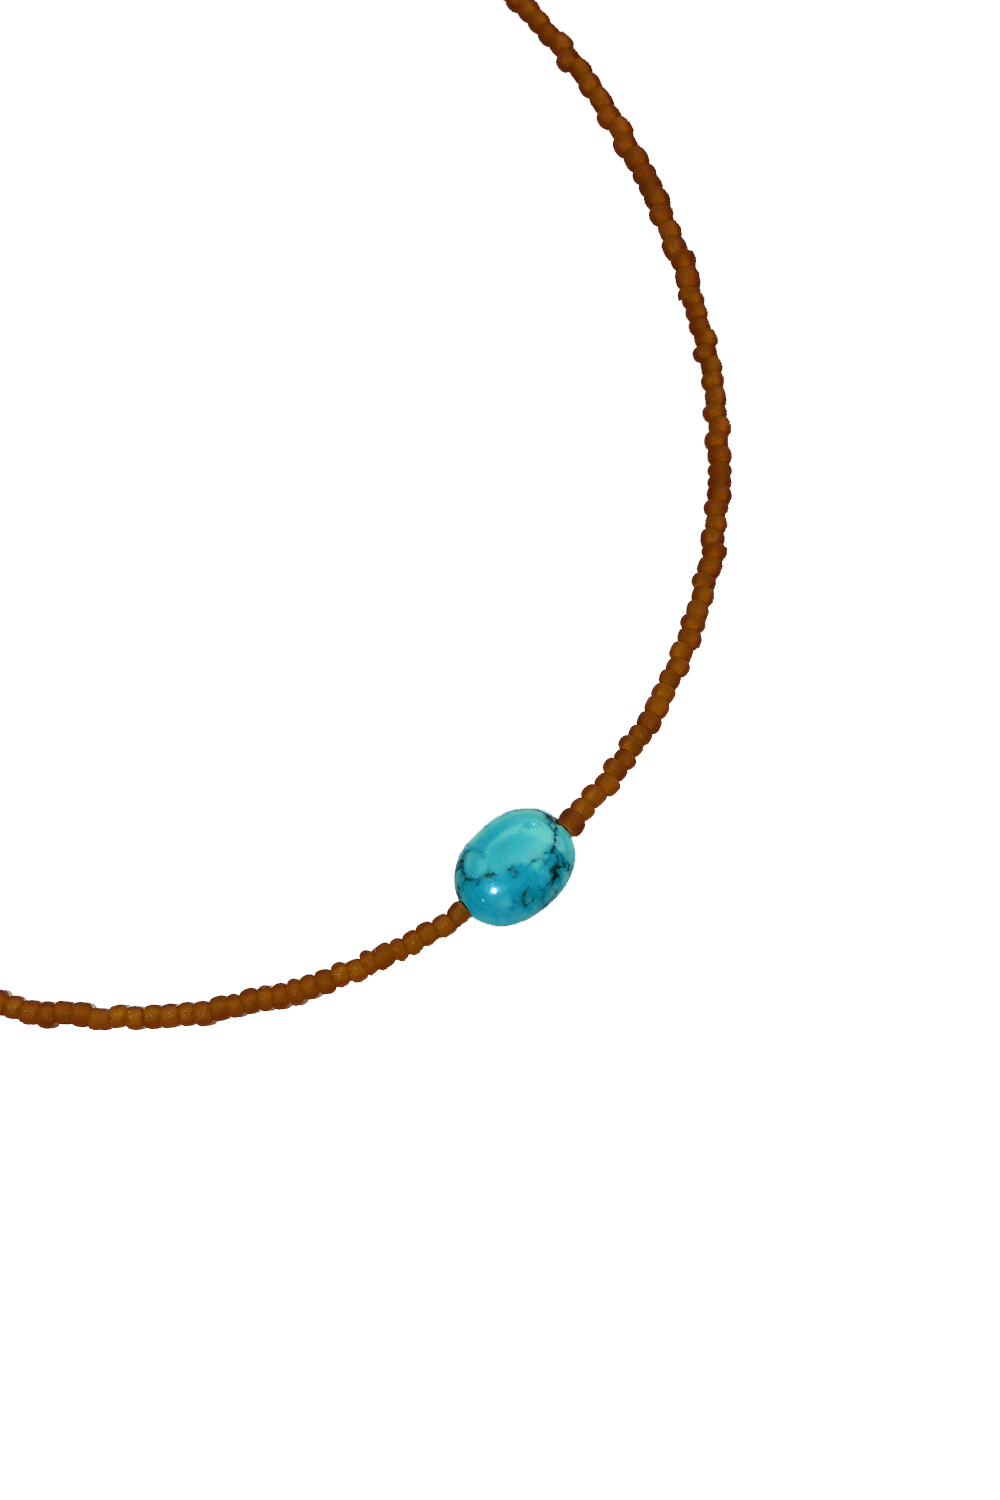 mari stone necklace